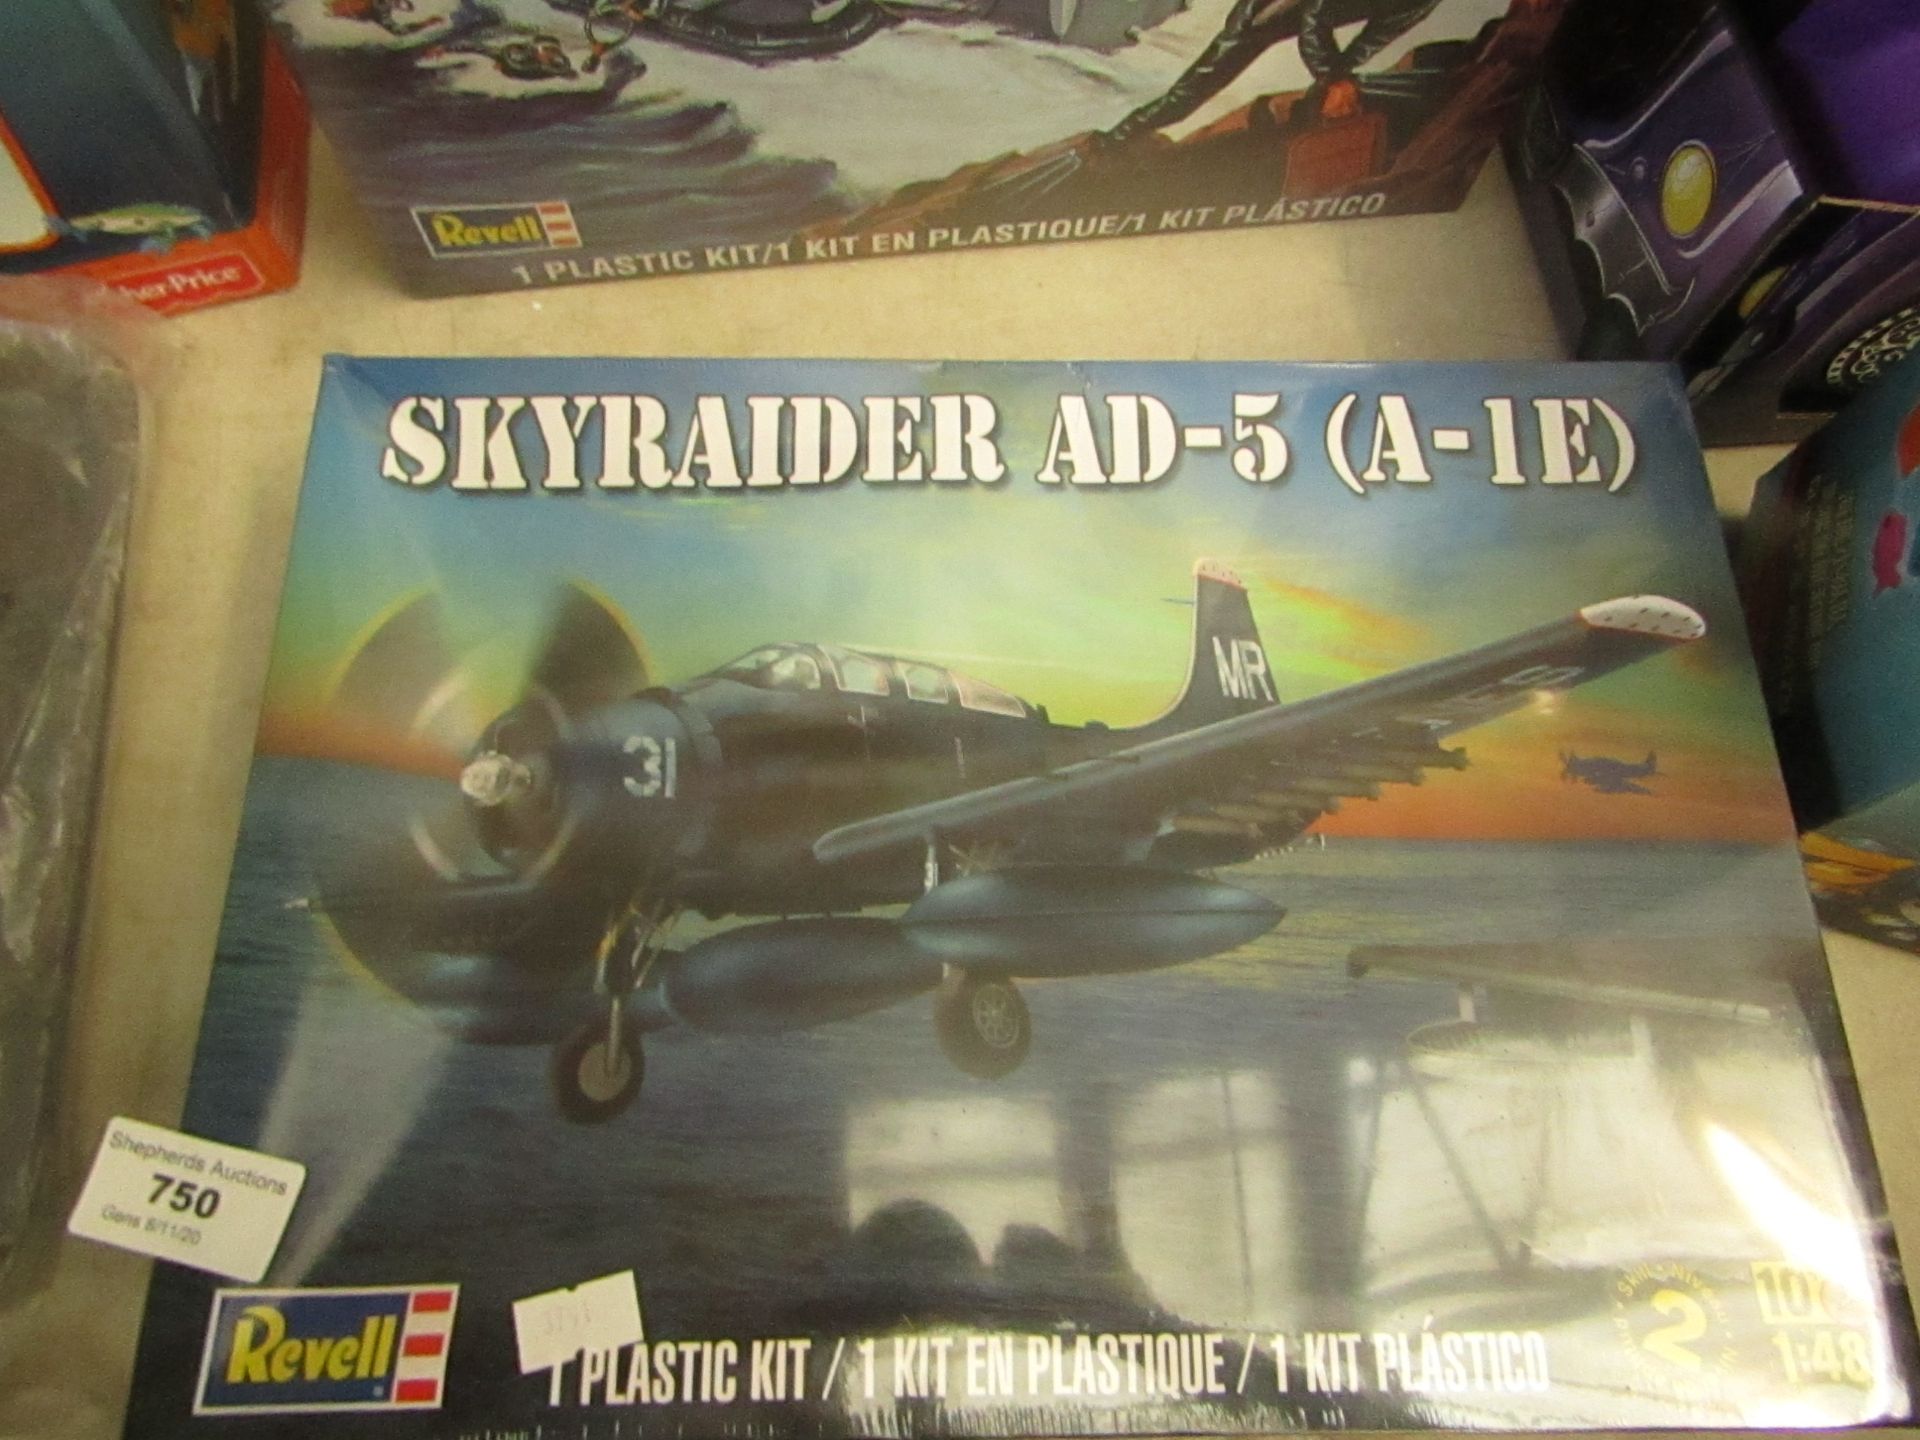 Revell Skyraider AD-5 palane model kit, still selaed but the box is slightly damaged